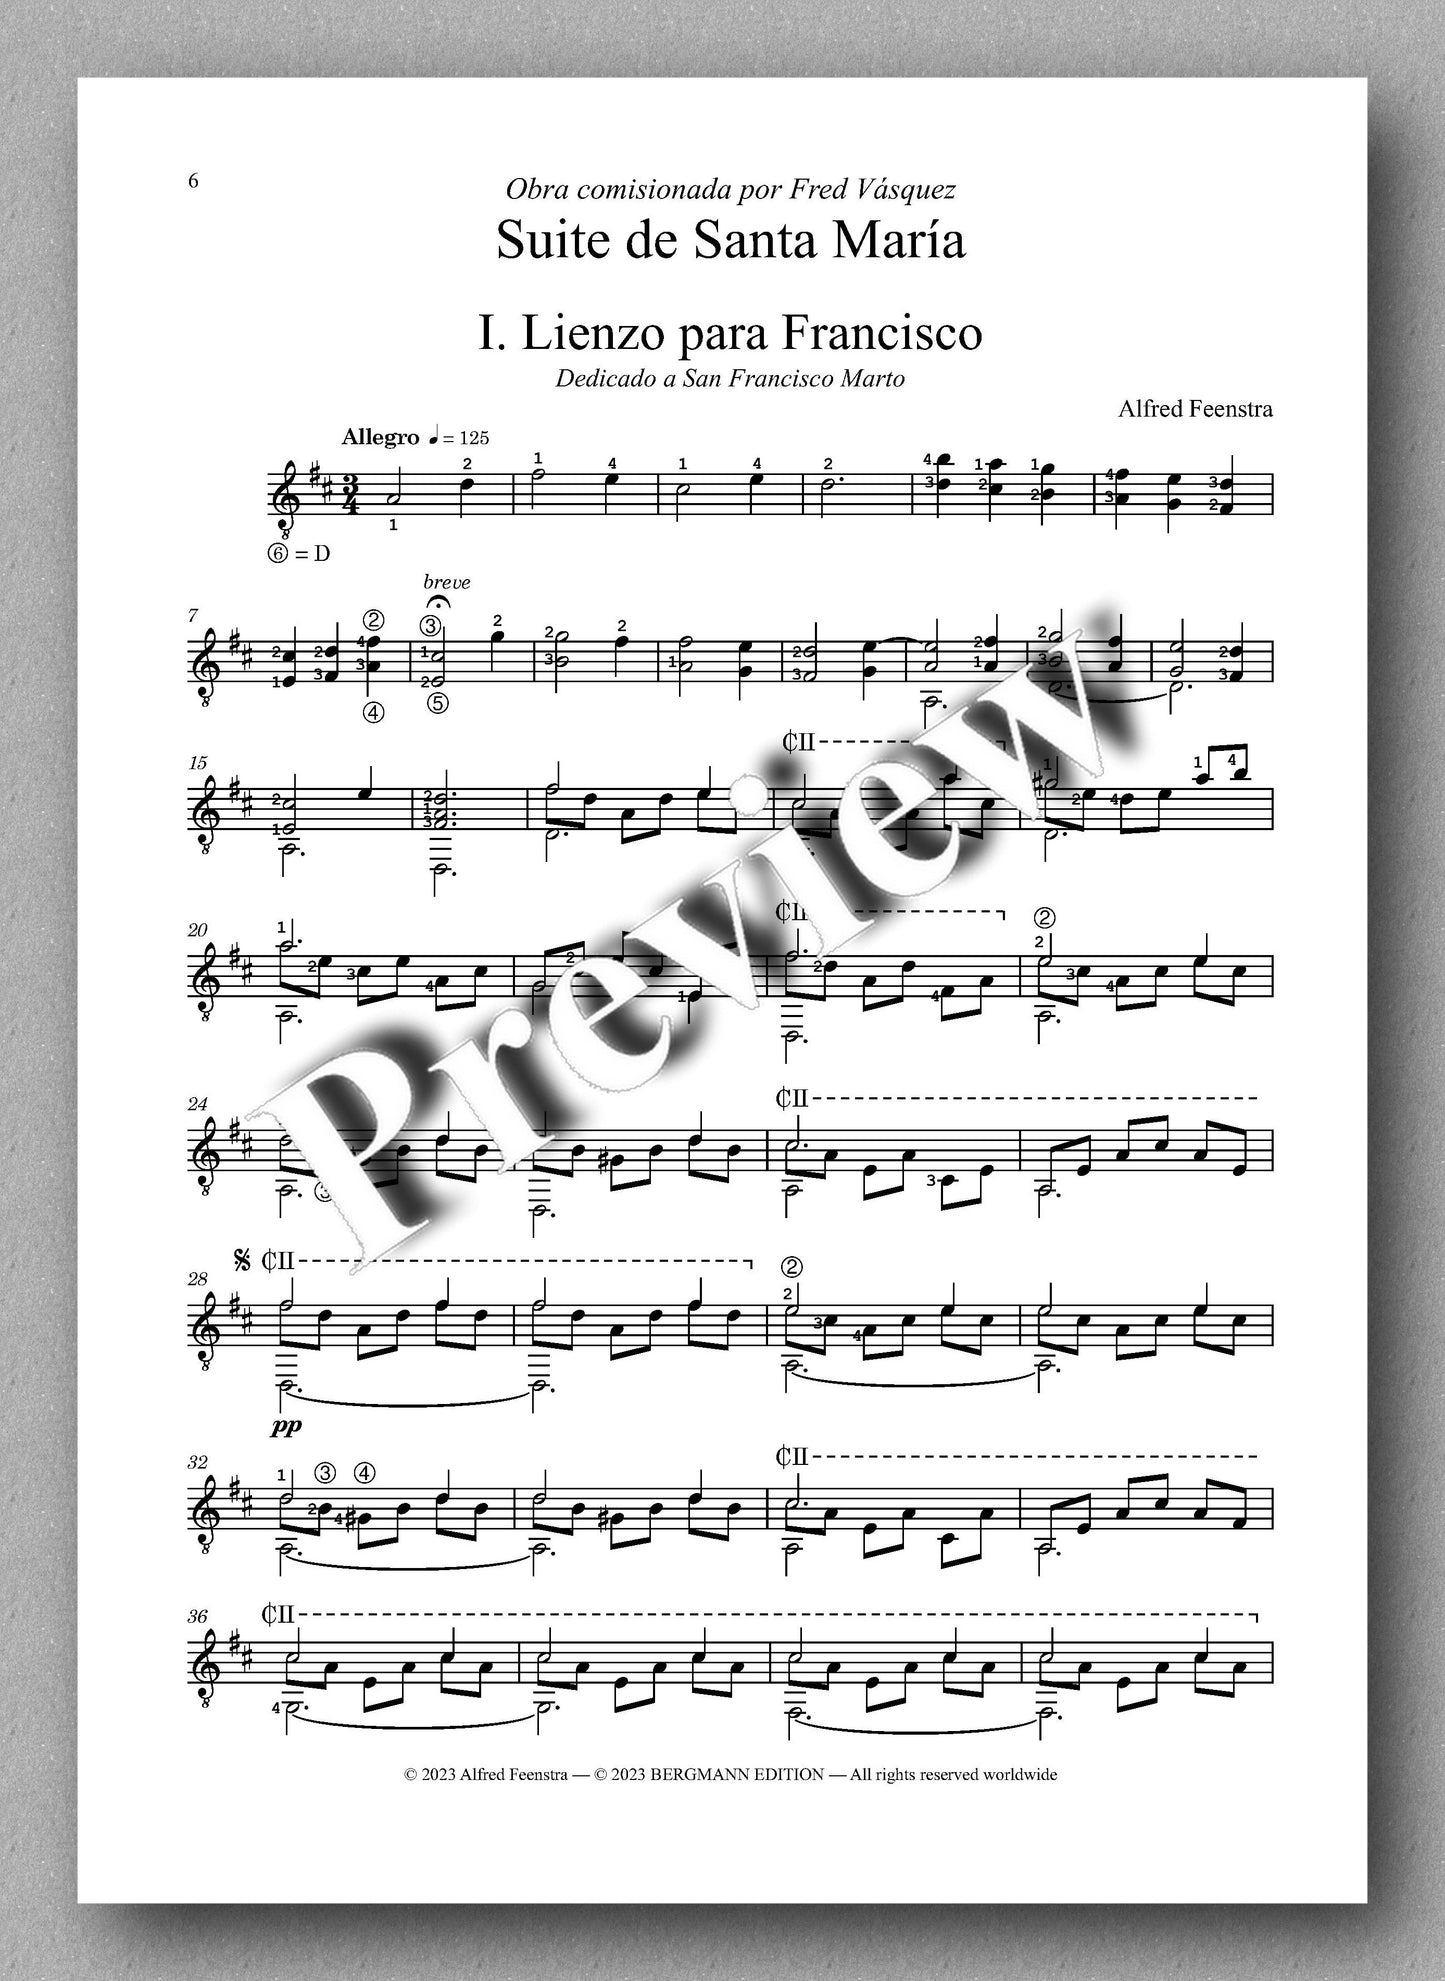 Alfred Feenstra, Suite de Santa María - preview of the music score 1